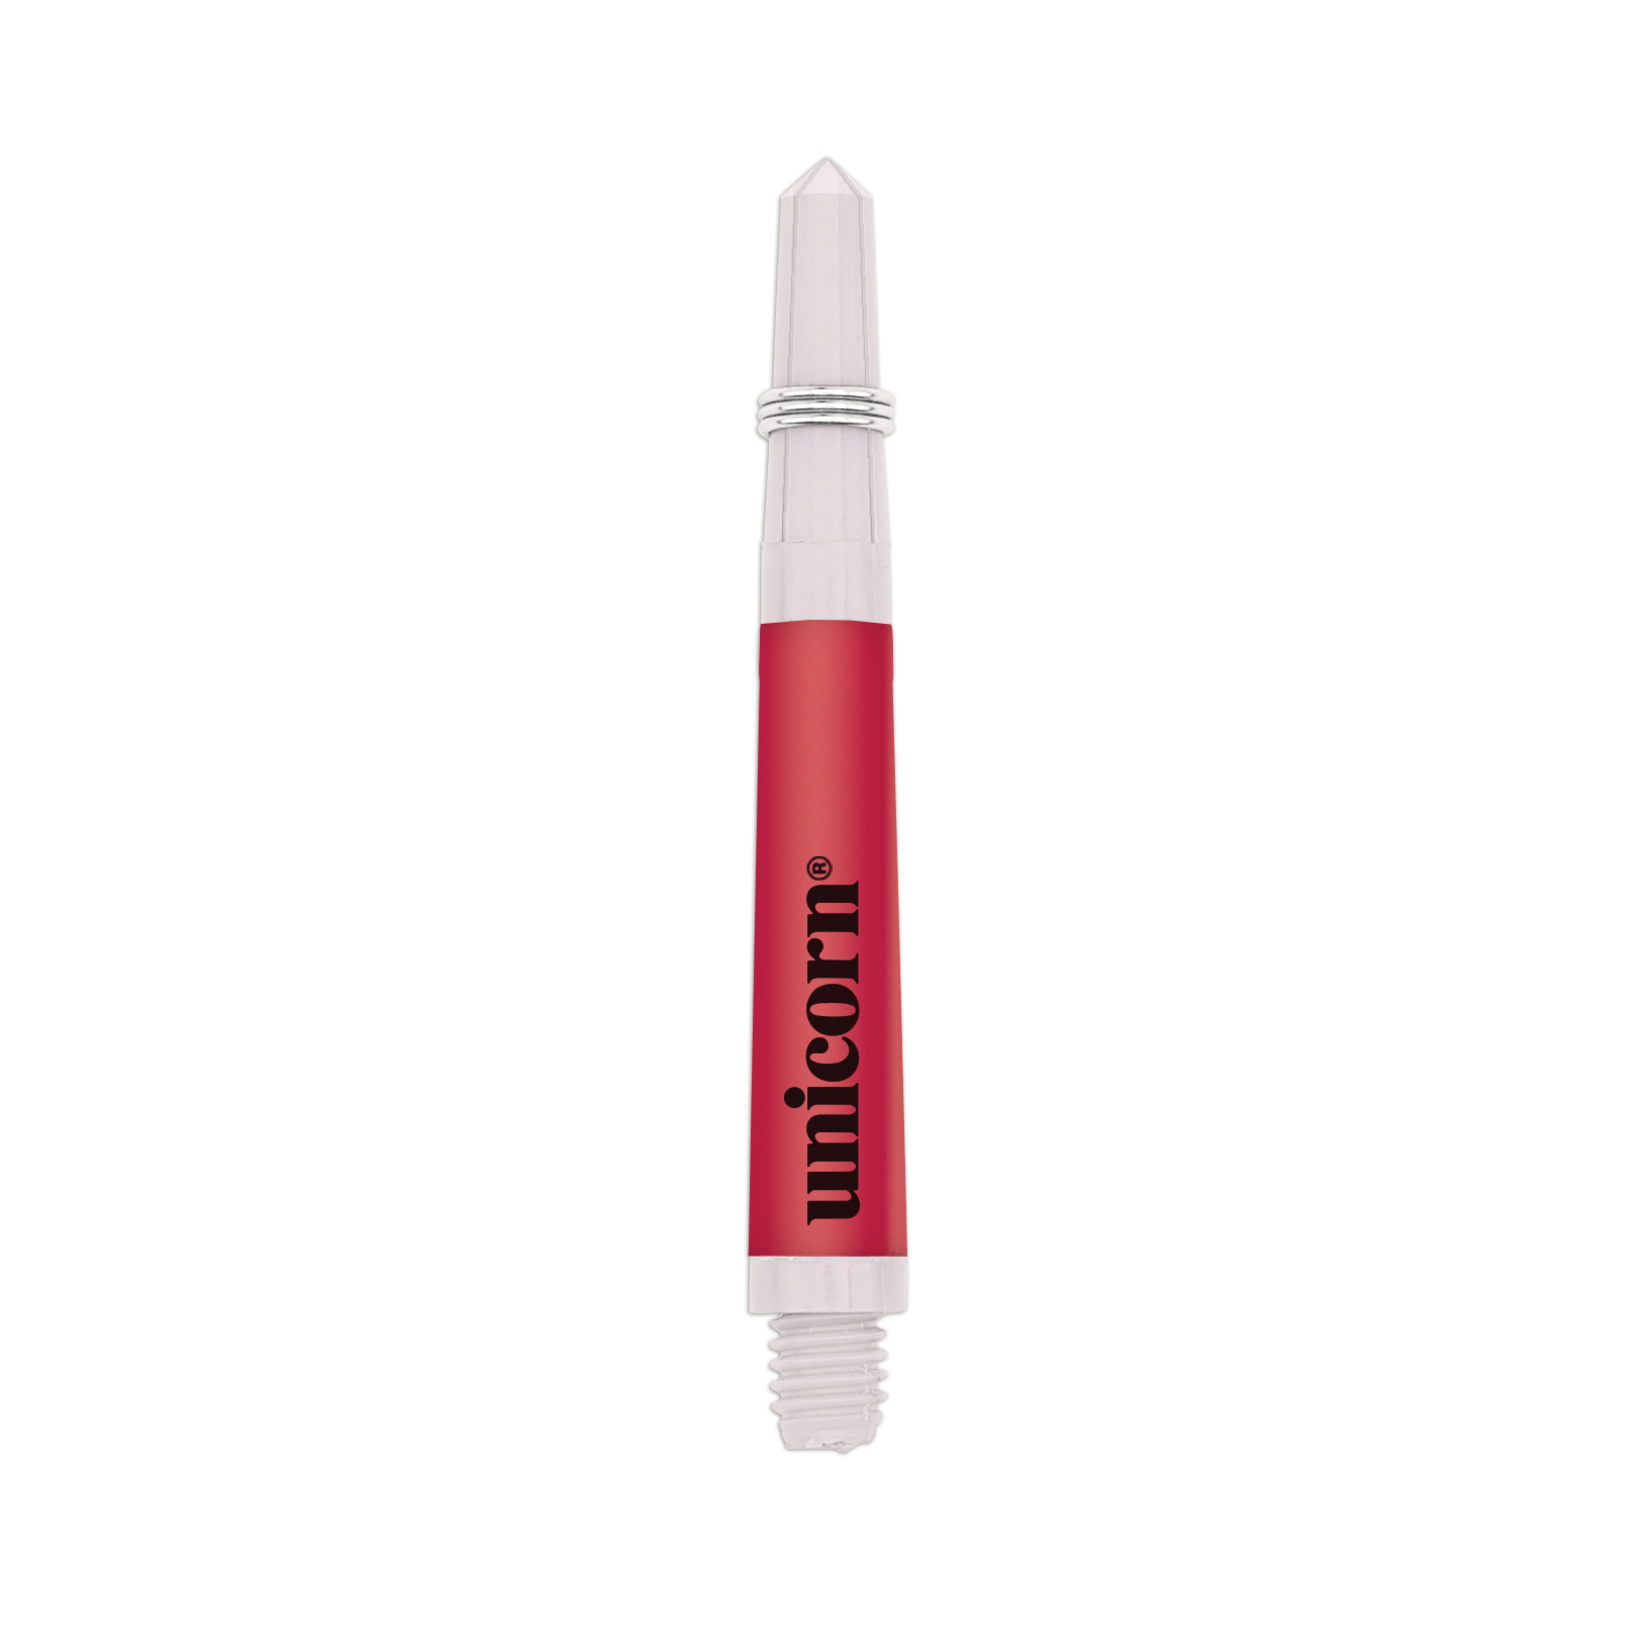 Unicorn Darts Unicorn Gripper SoftFlex Red and White 50mm Dart Shafts